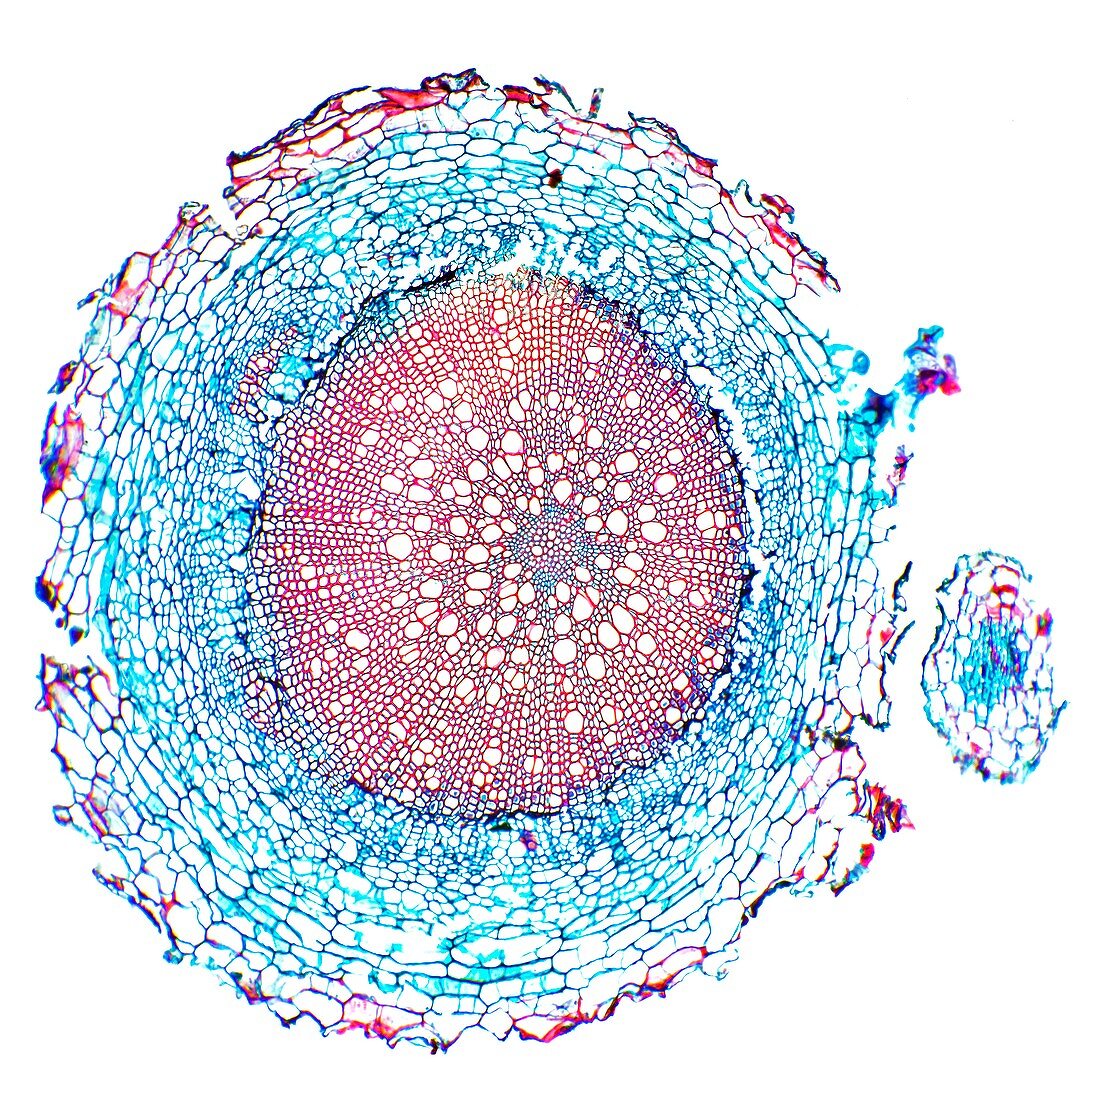 Foxglove root,light micrograph